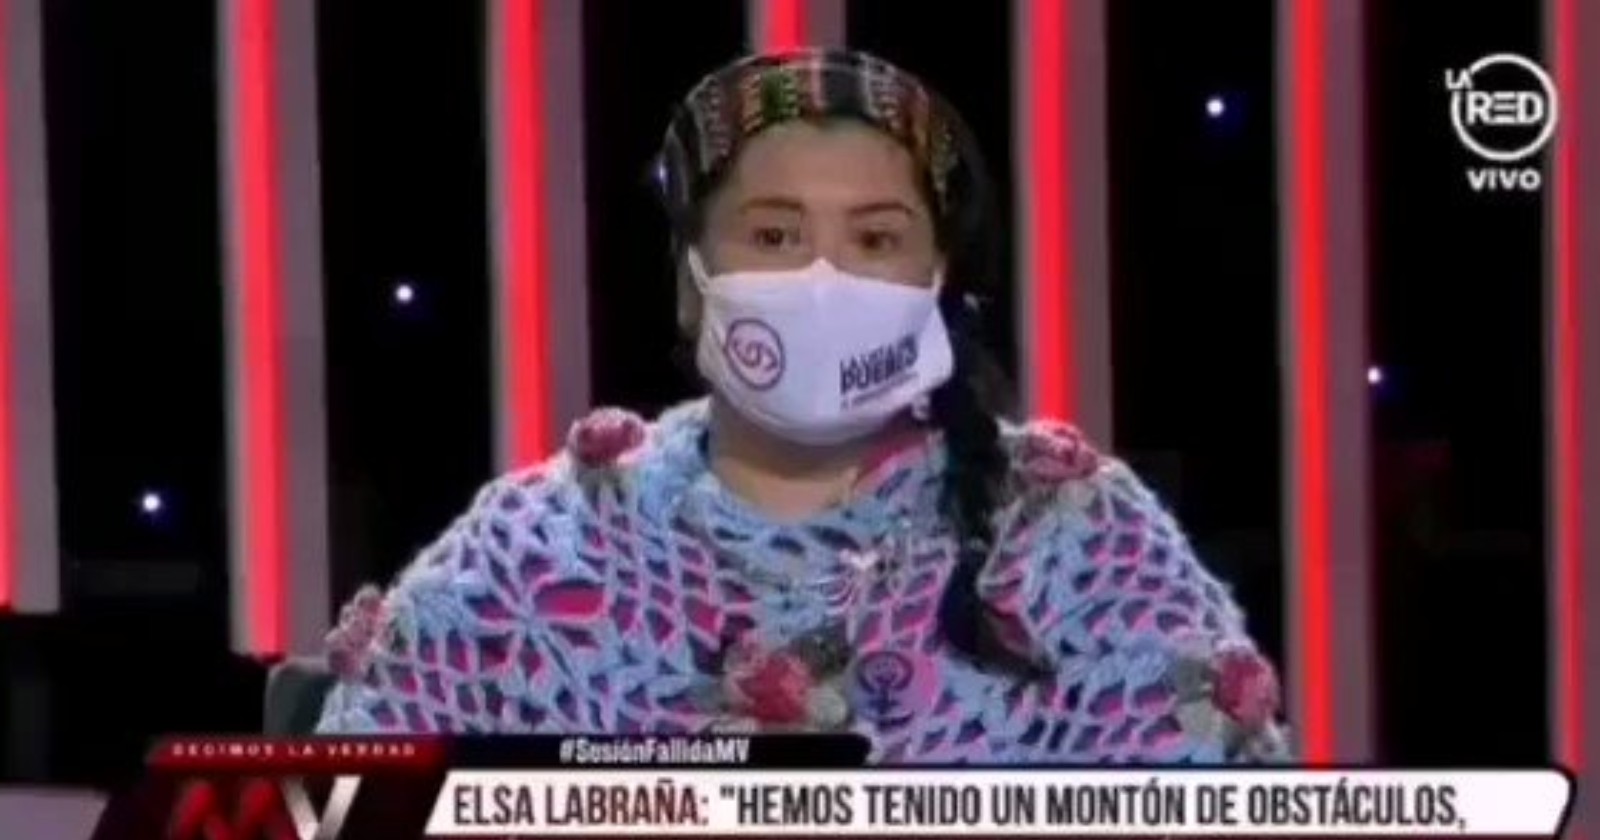 Elsa Labraña himno